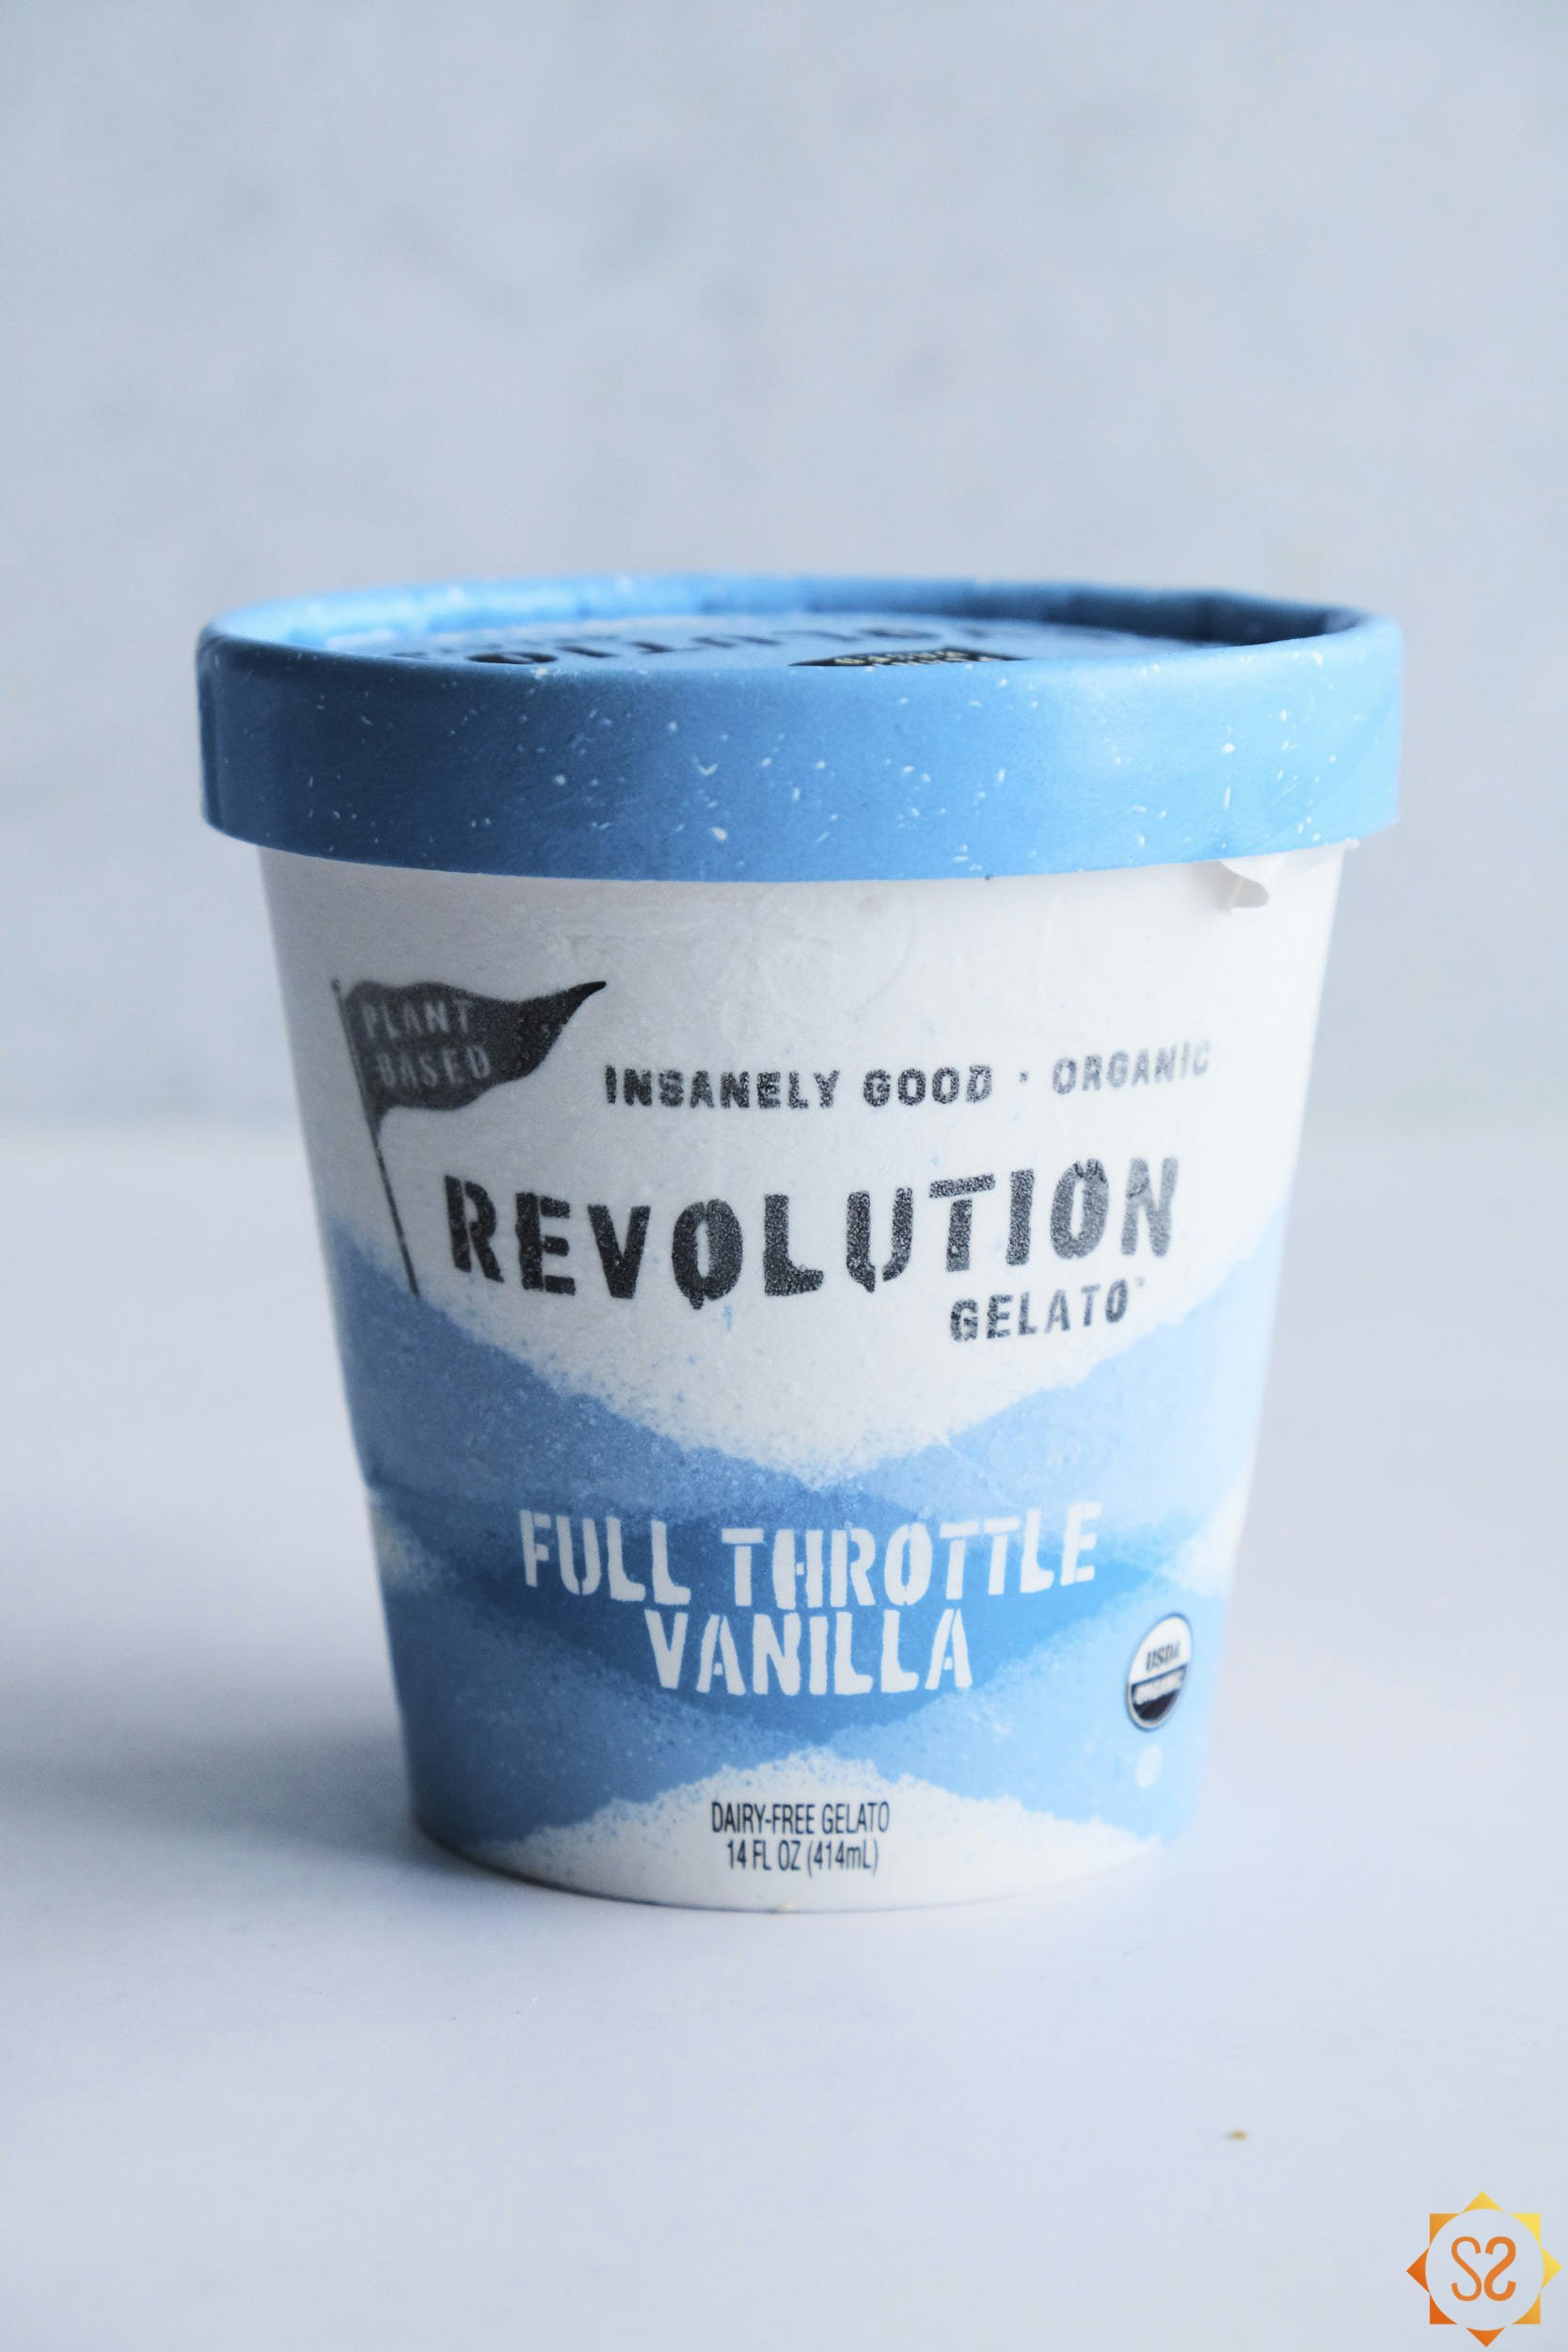 Revolution Gelato Full Throttle Vanilla package